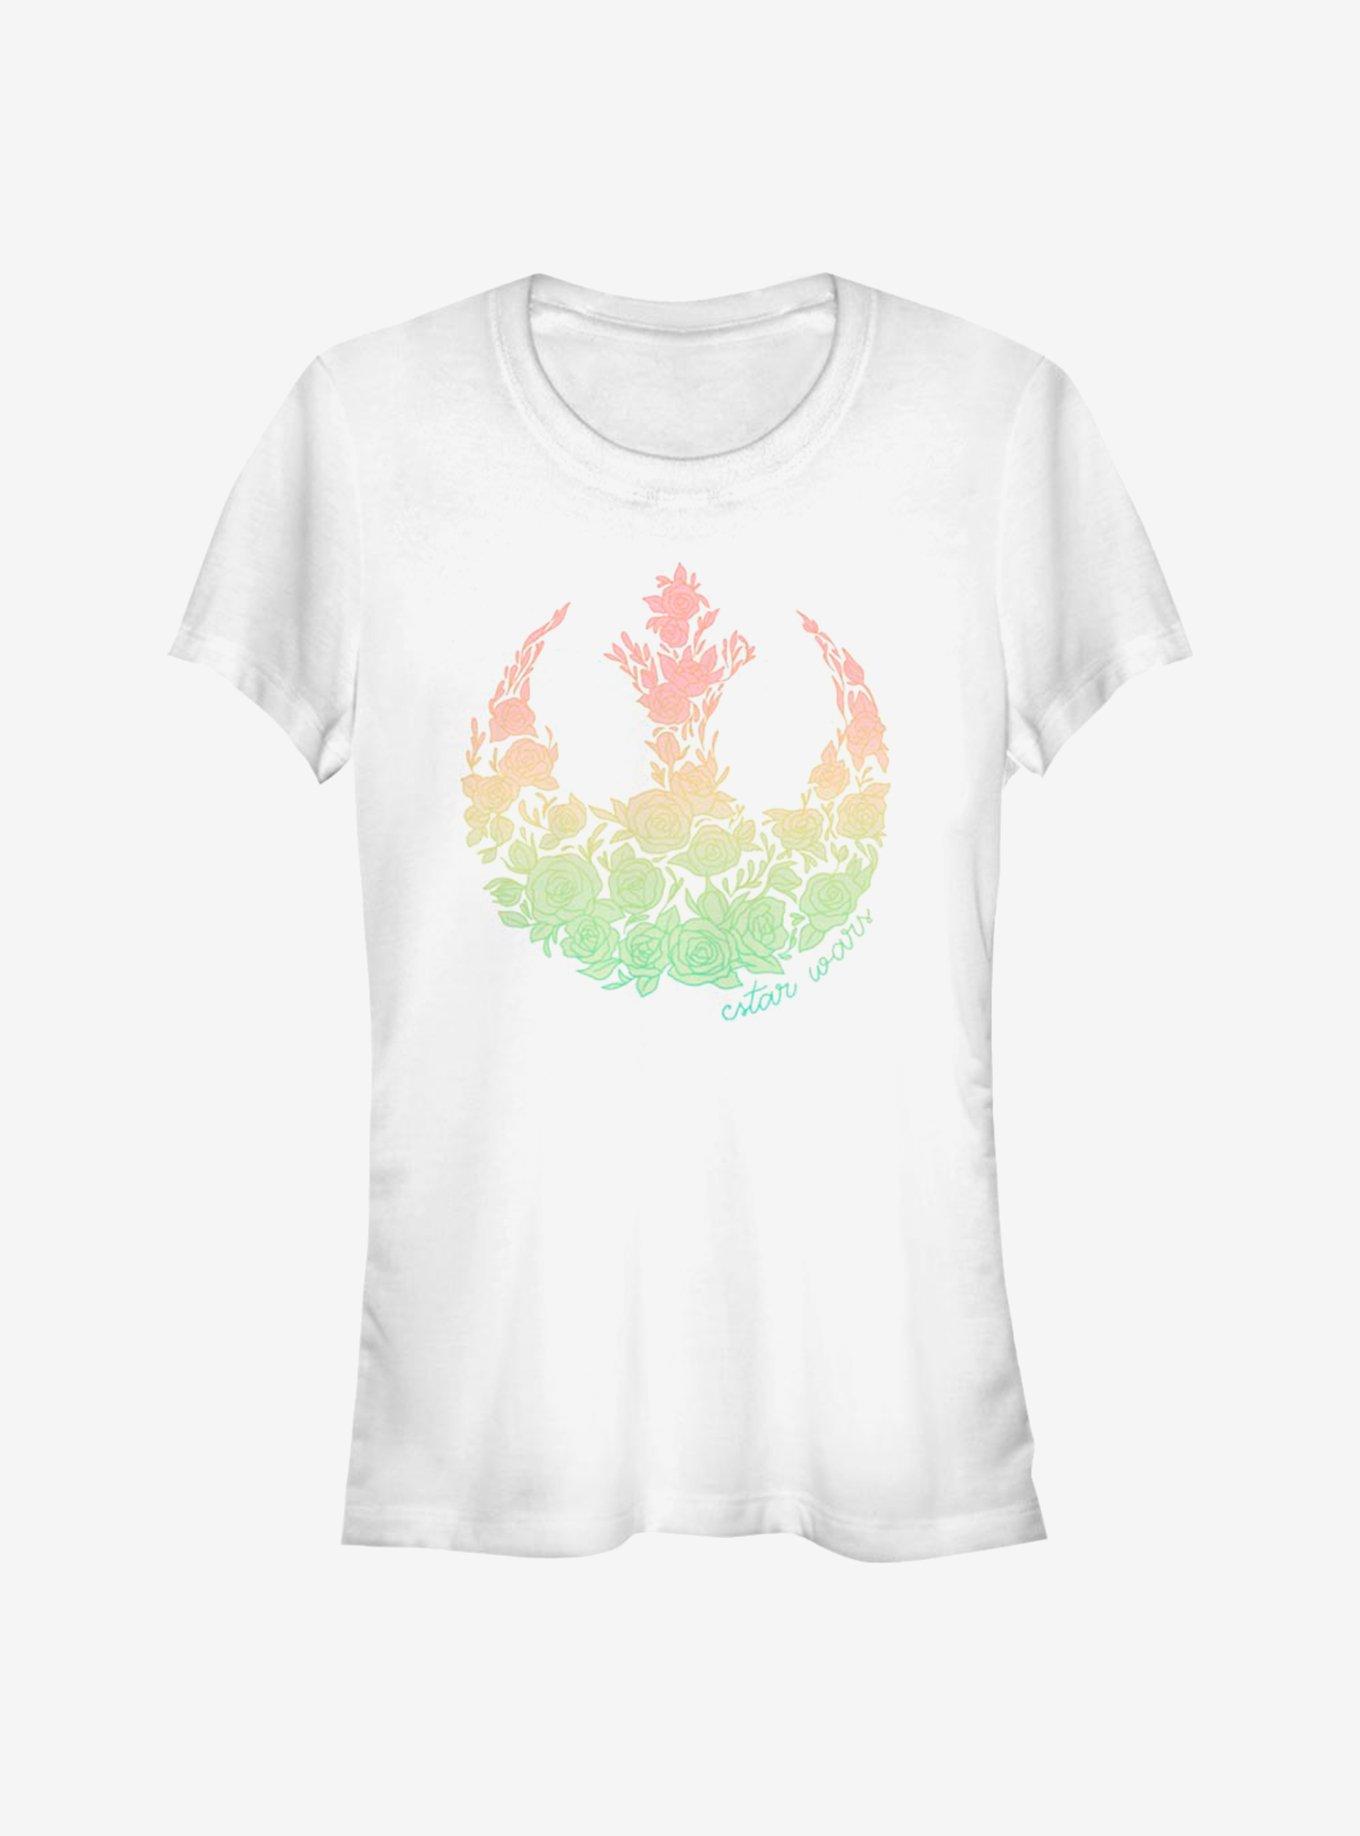 Star Wars Rainbow Rebel Roses Girls T-Shirt